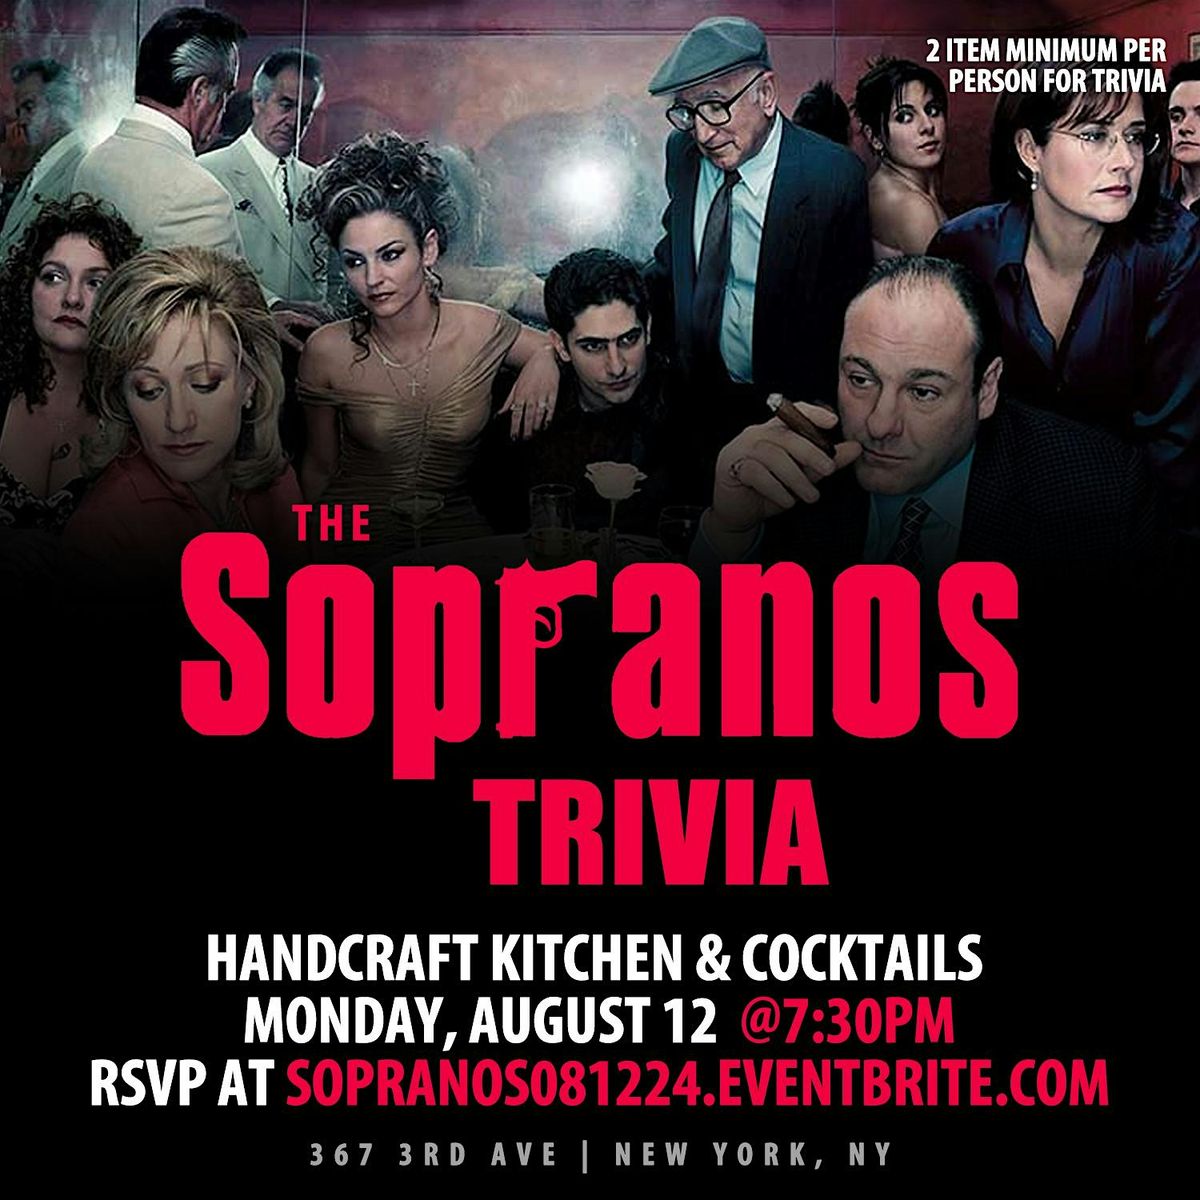 The Sopranos Trivia